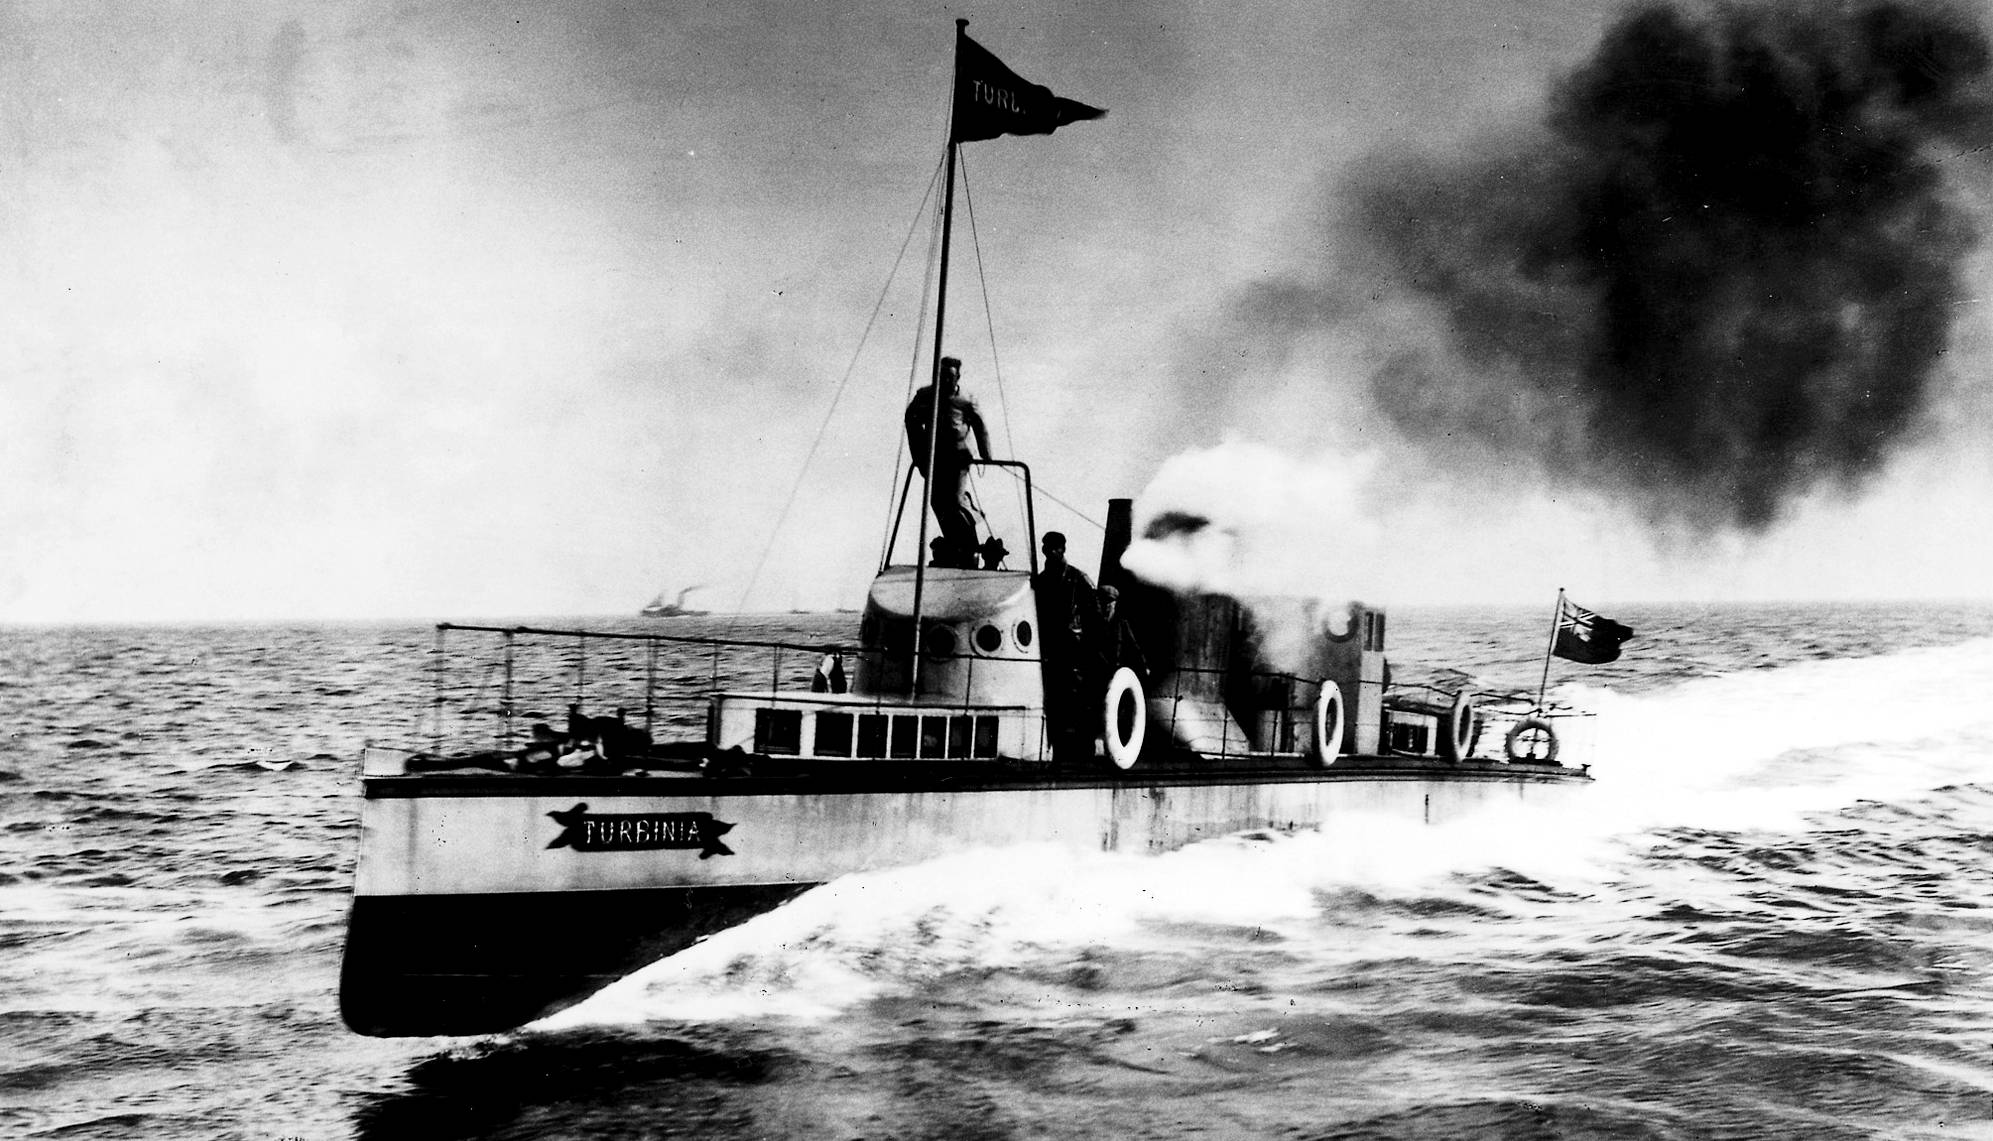 Turbinia steam trubine powered yacht by Charles Algernon Parsons